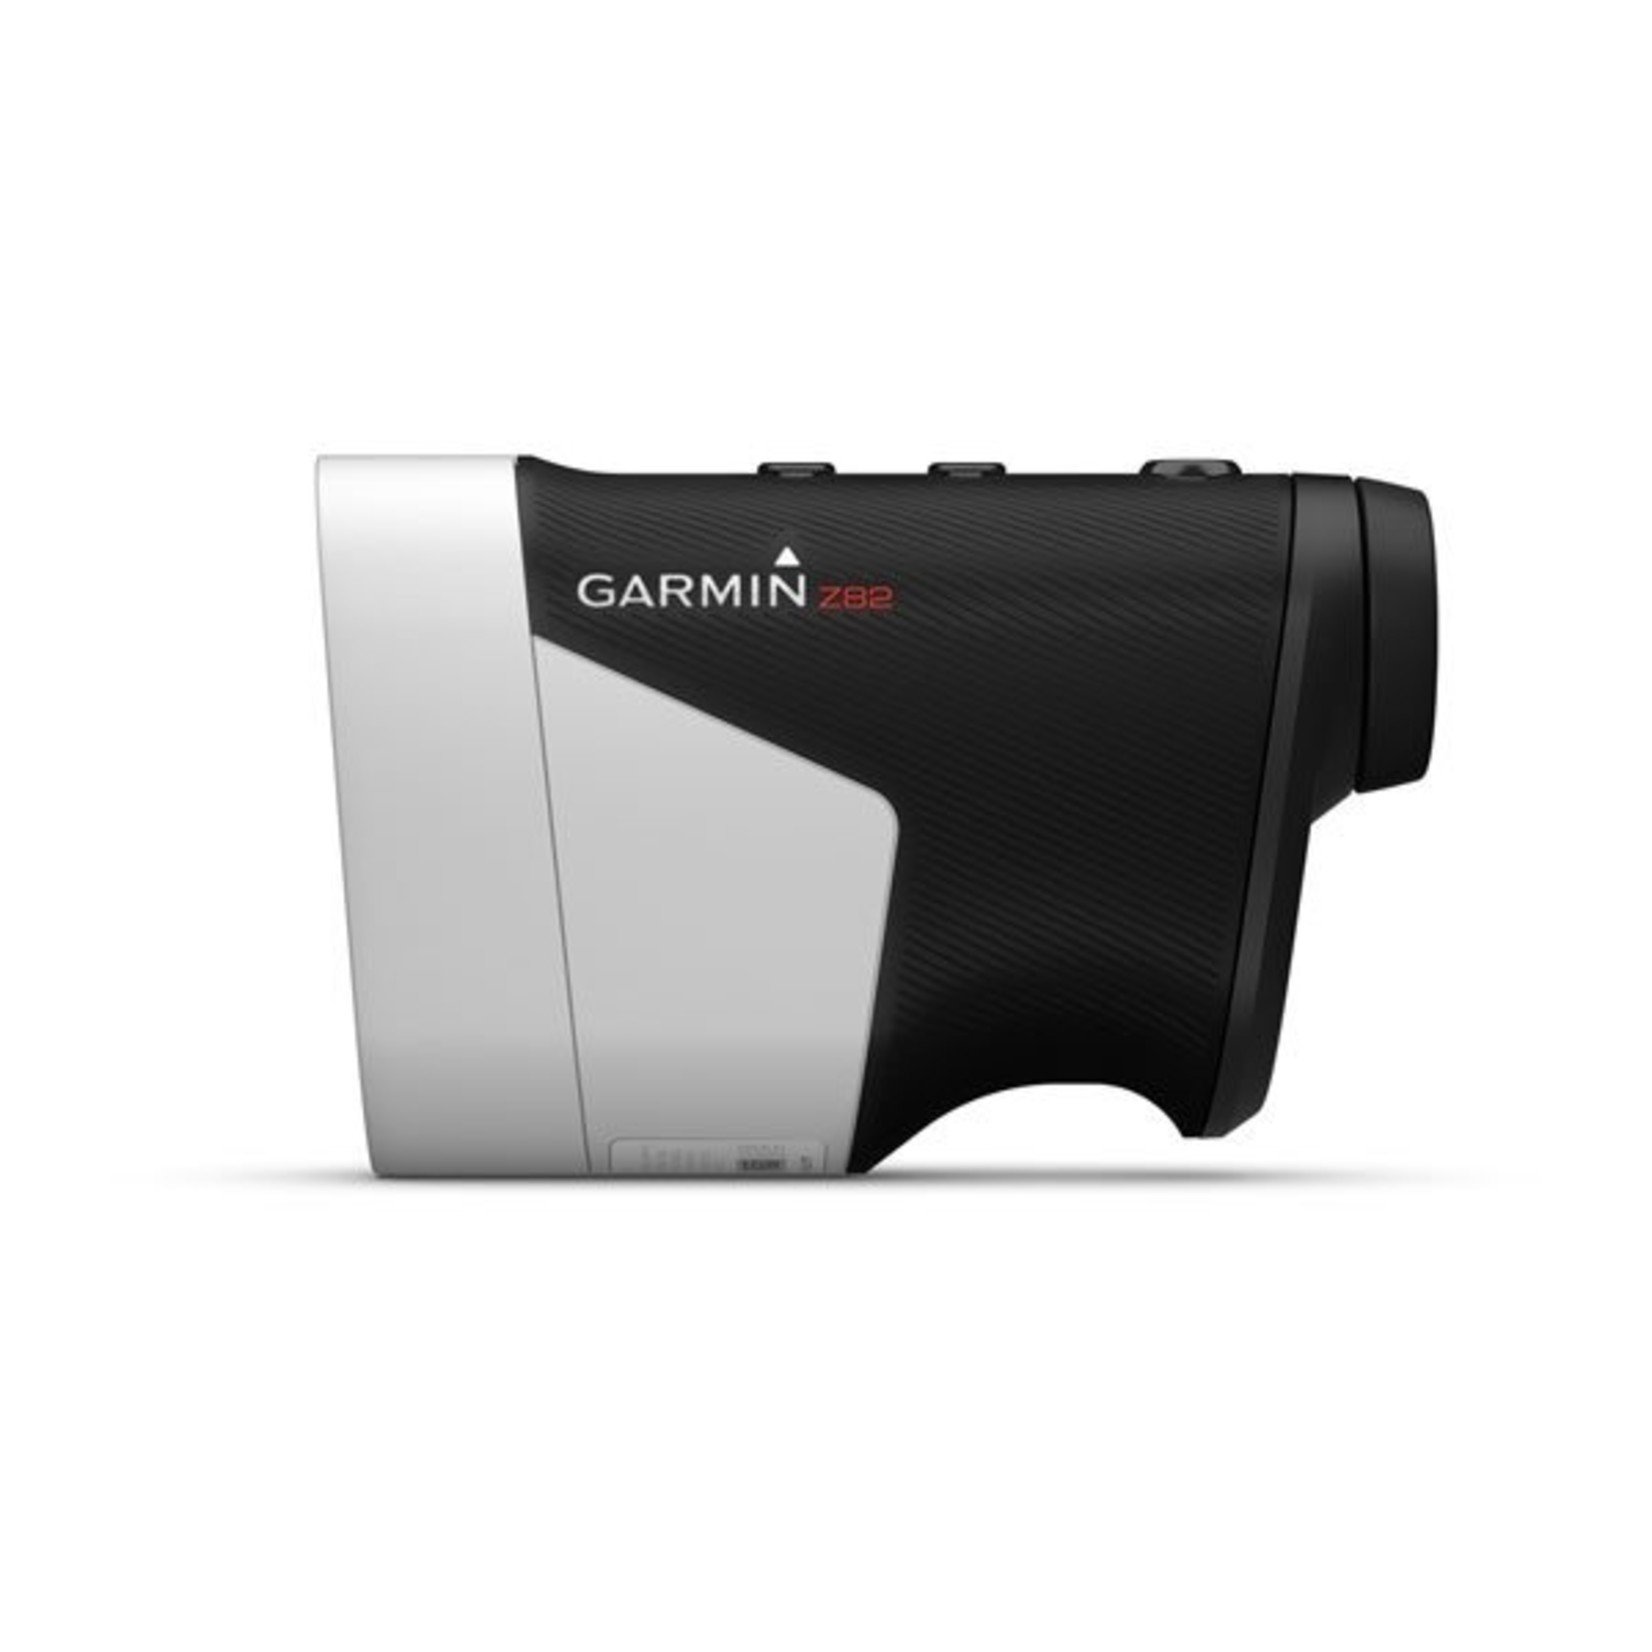 Garmin Garmin Approach Z82 Range Finder